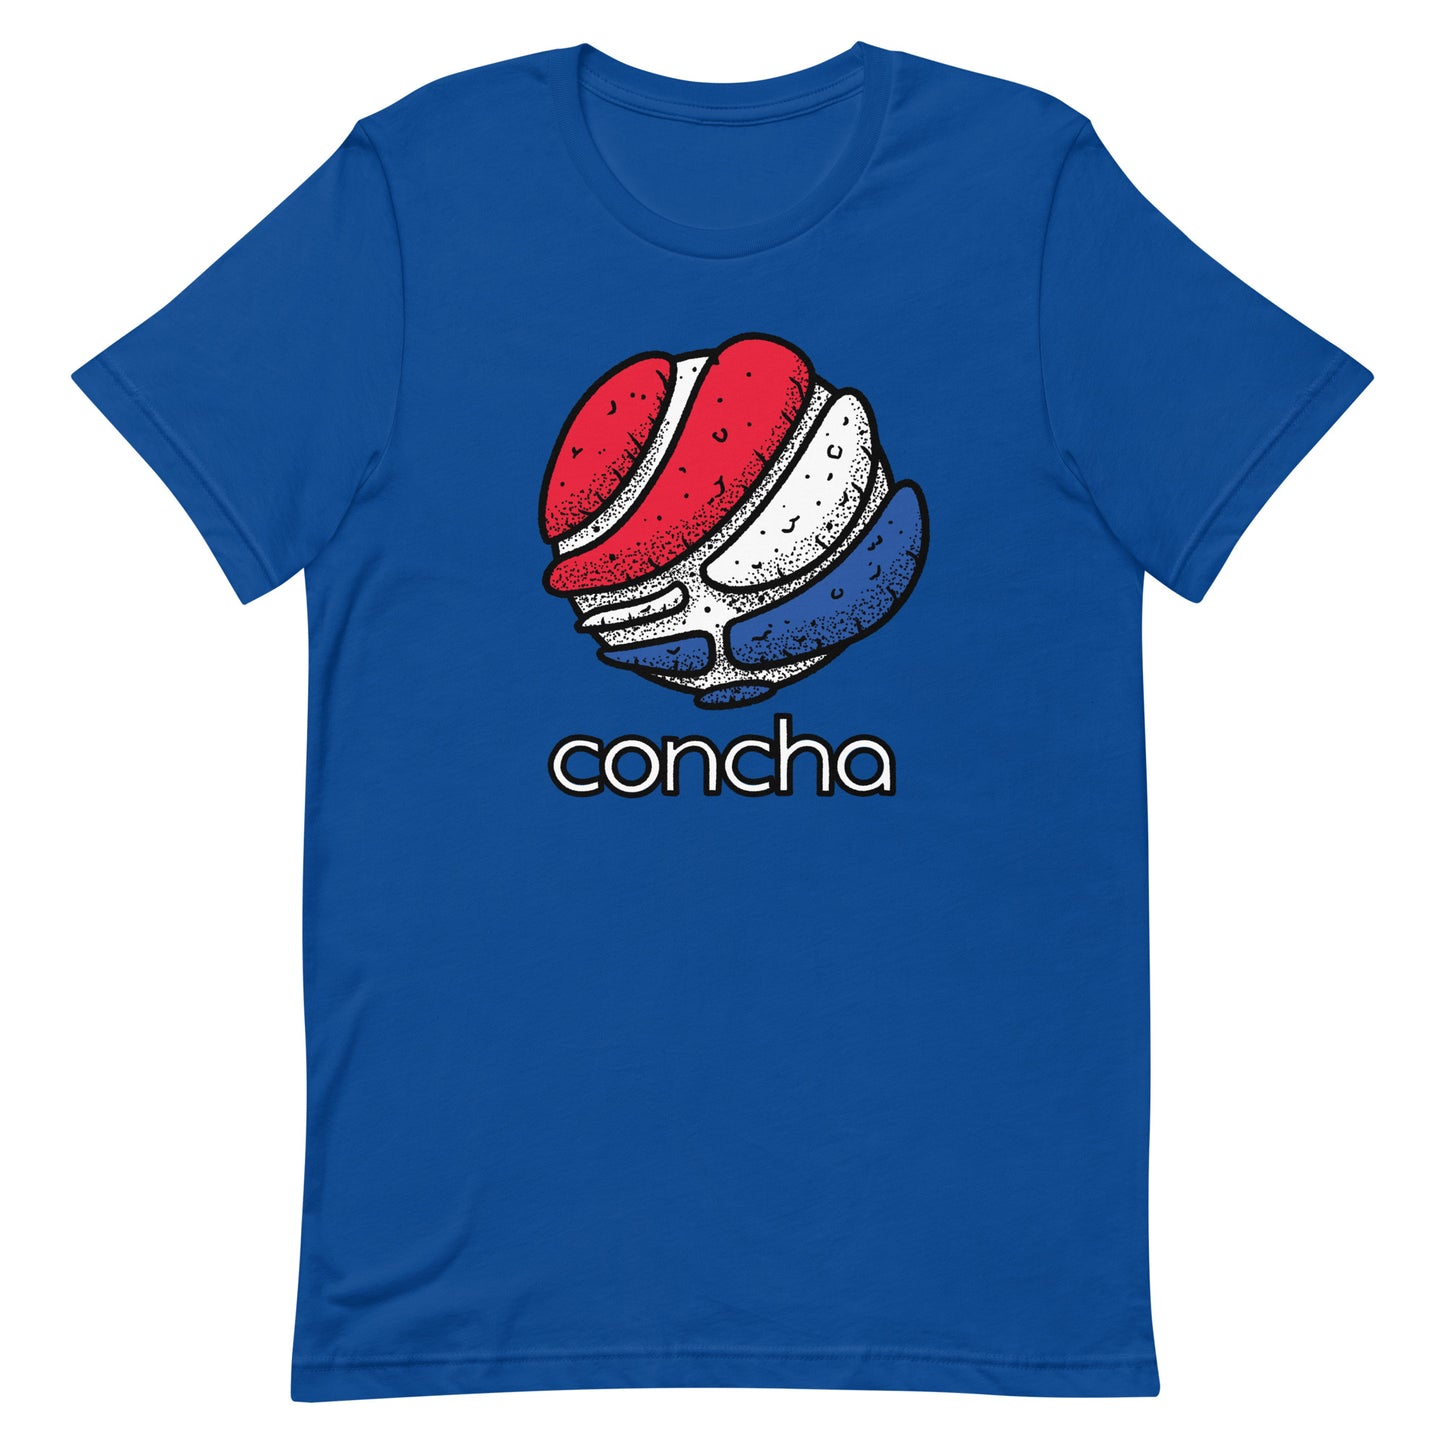 Concha Pepsi Parody Cool Mexican Food T-shirt